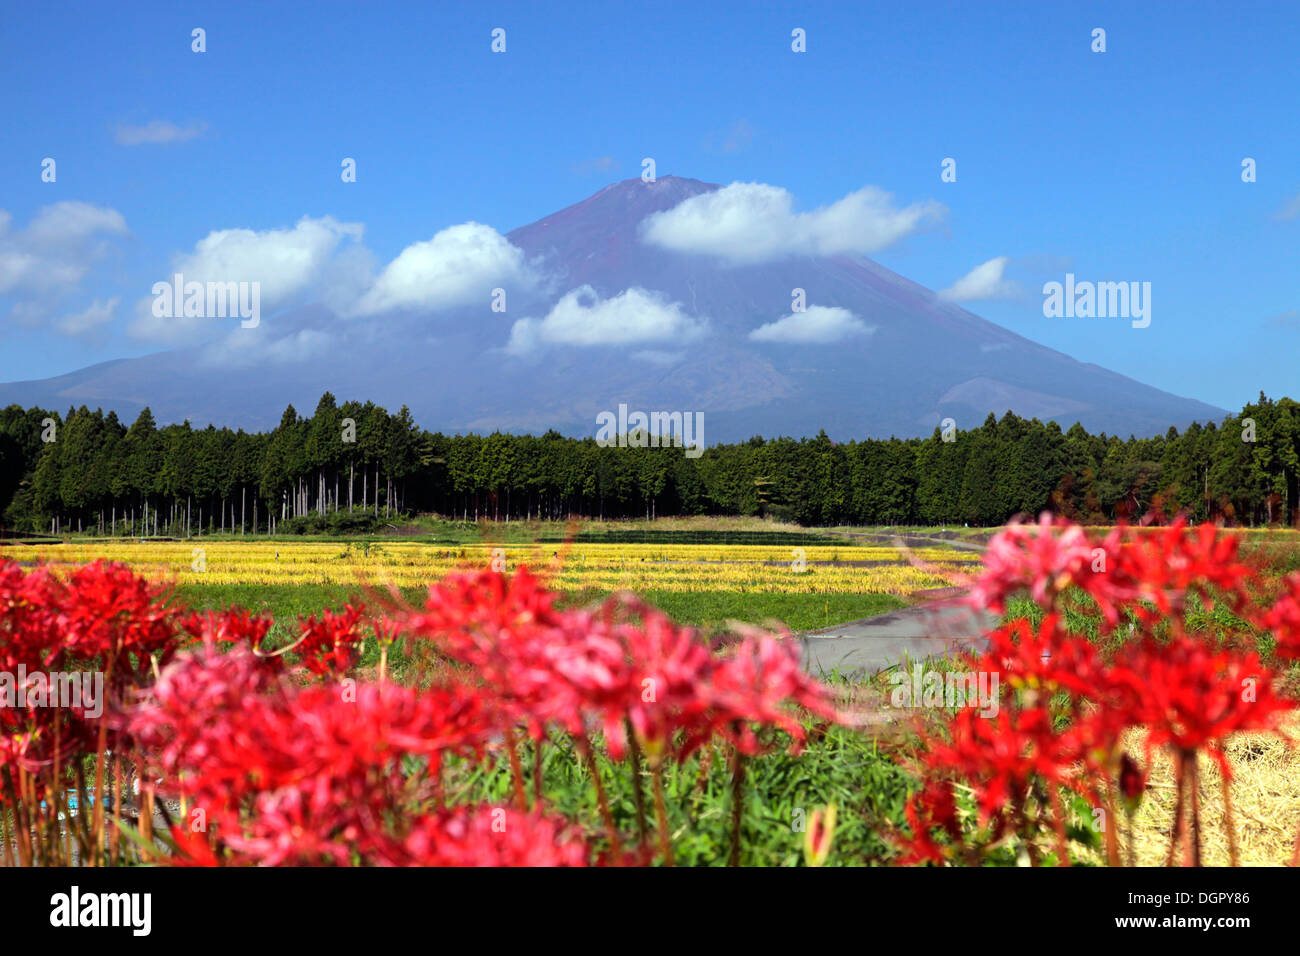 Mount Fuji and red spider lily Shizuoka Japan Stock Photo